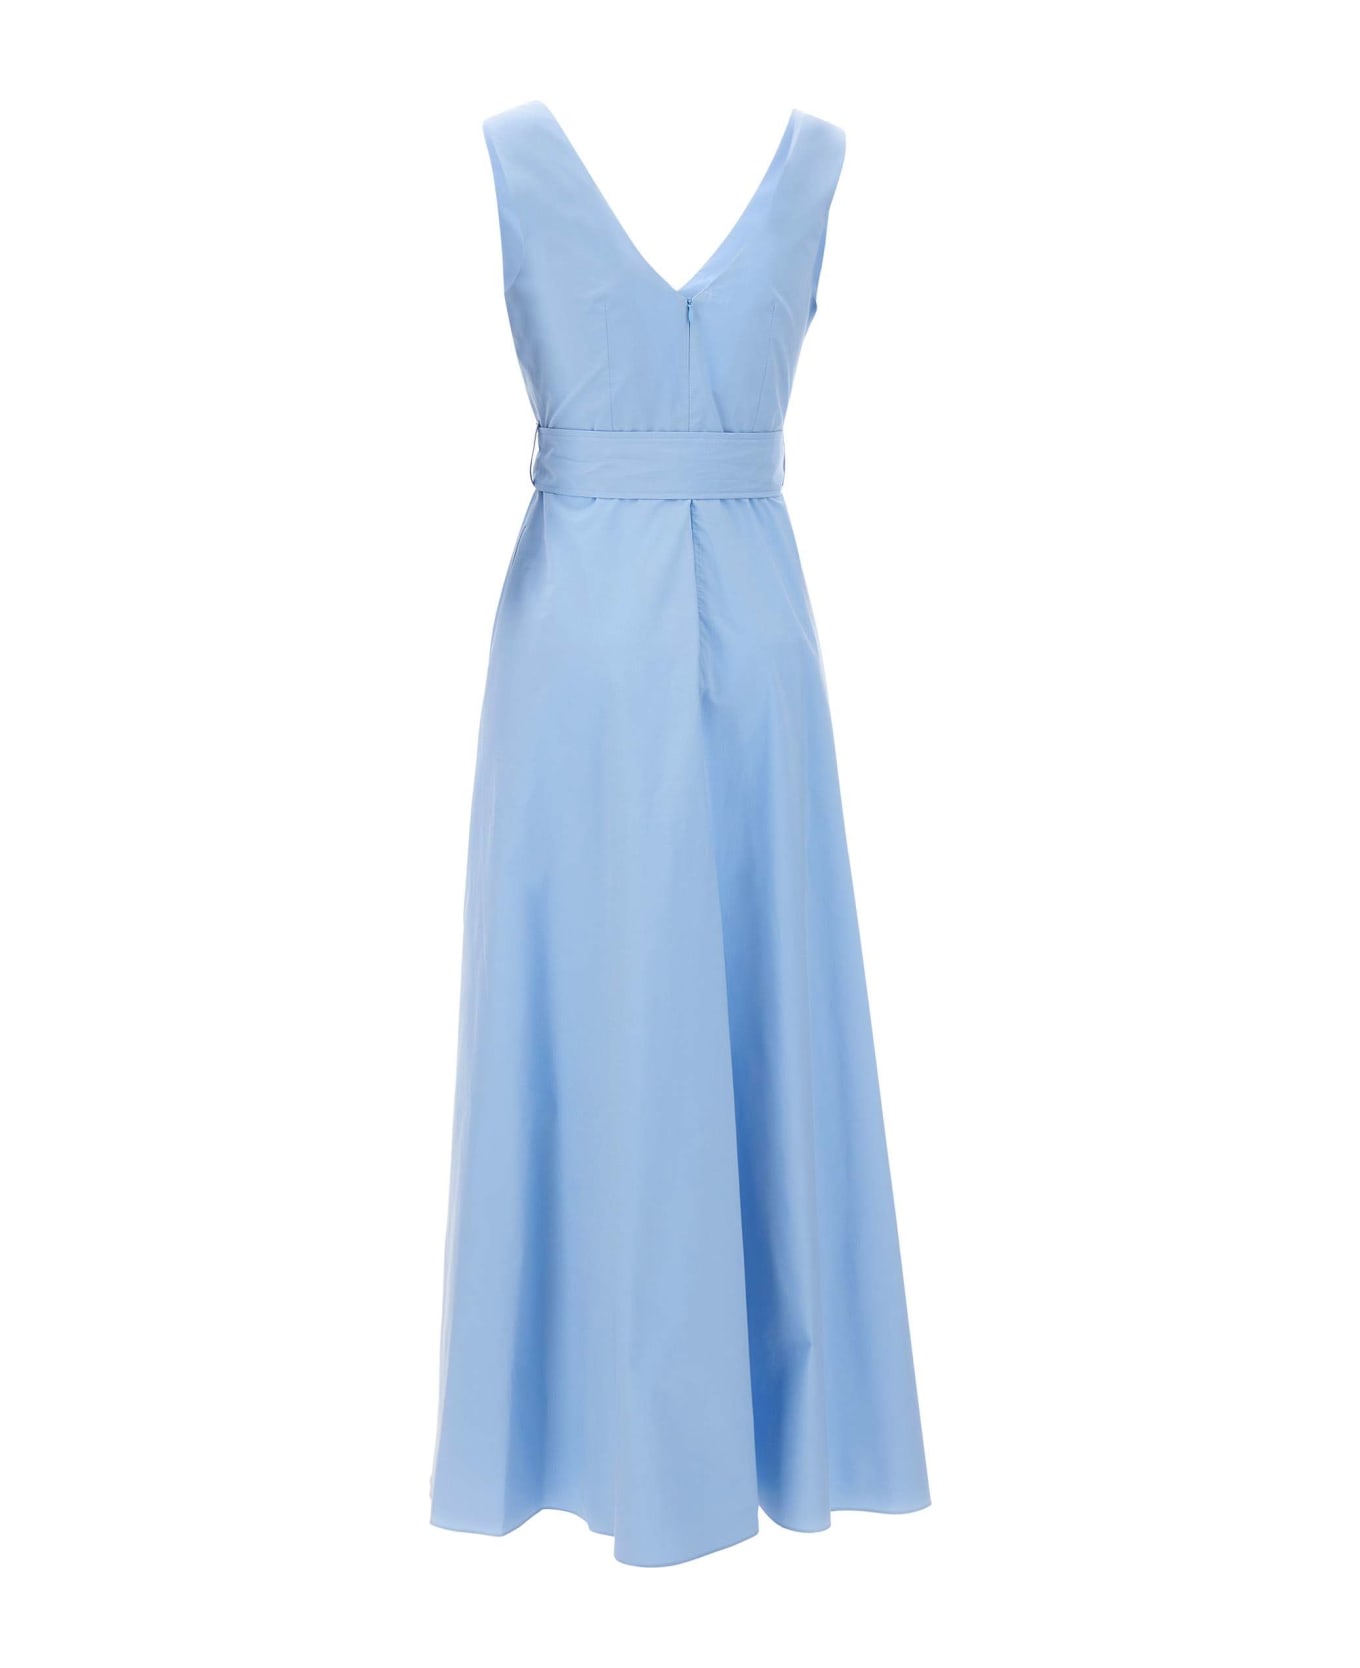 Parosh 'canyox24' Cotton Dress - Light Blue Dust